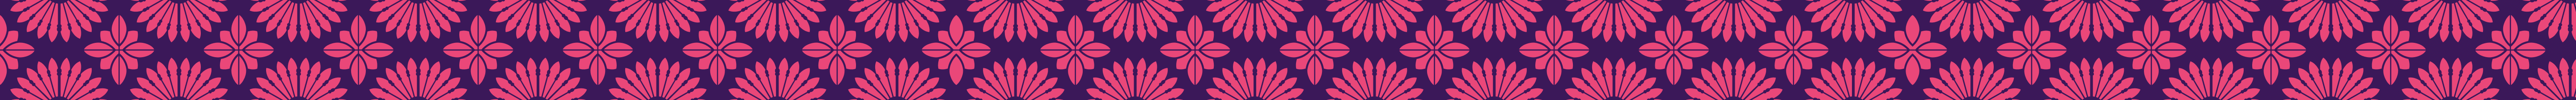 Saffron Road Purple Background Banner Image